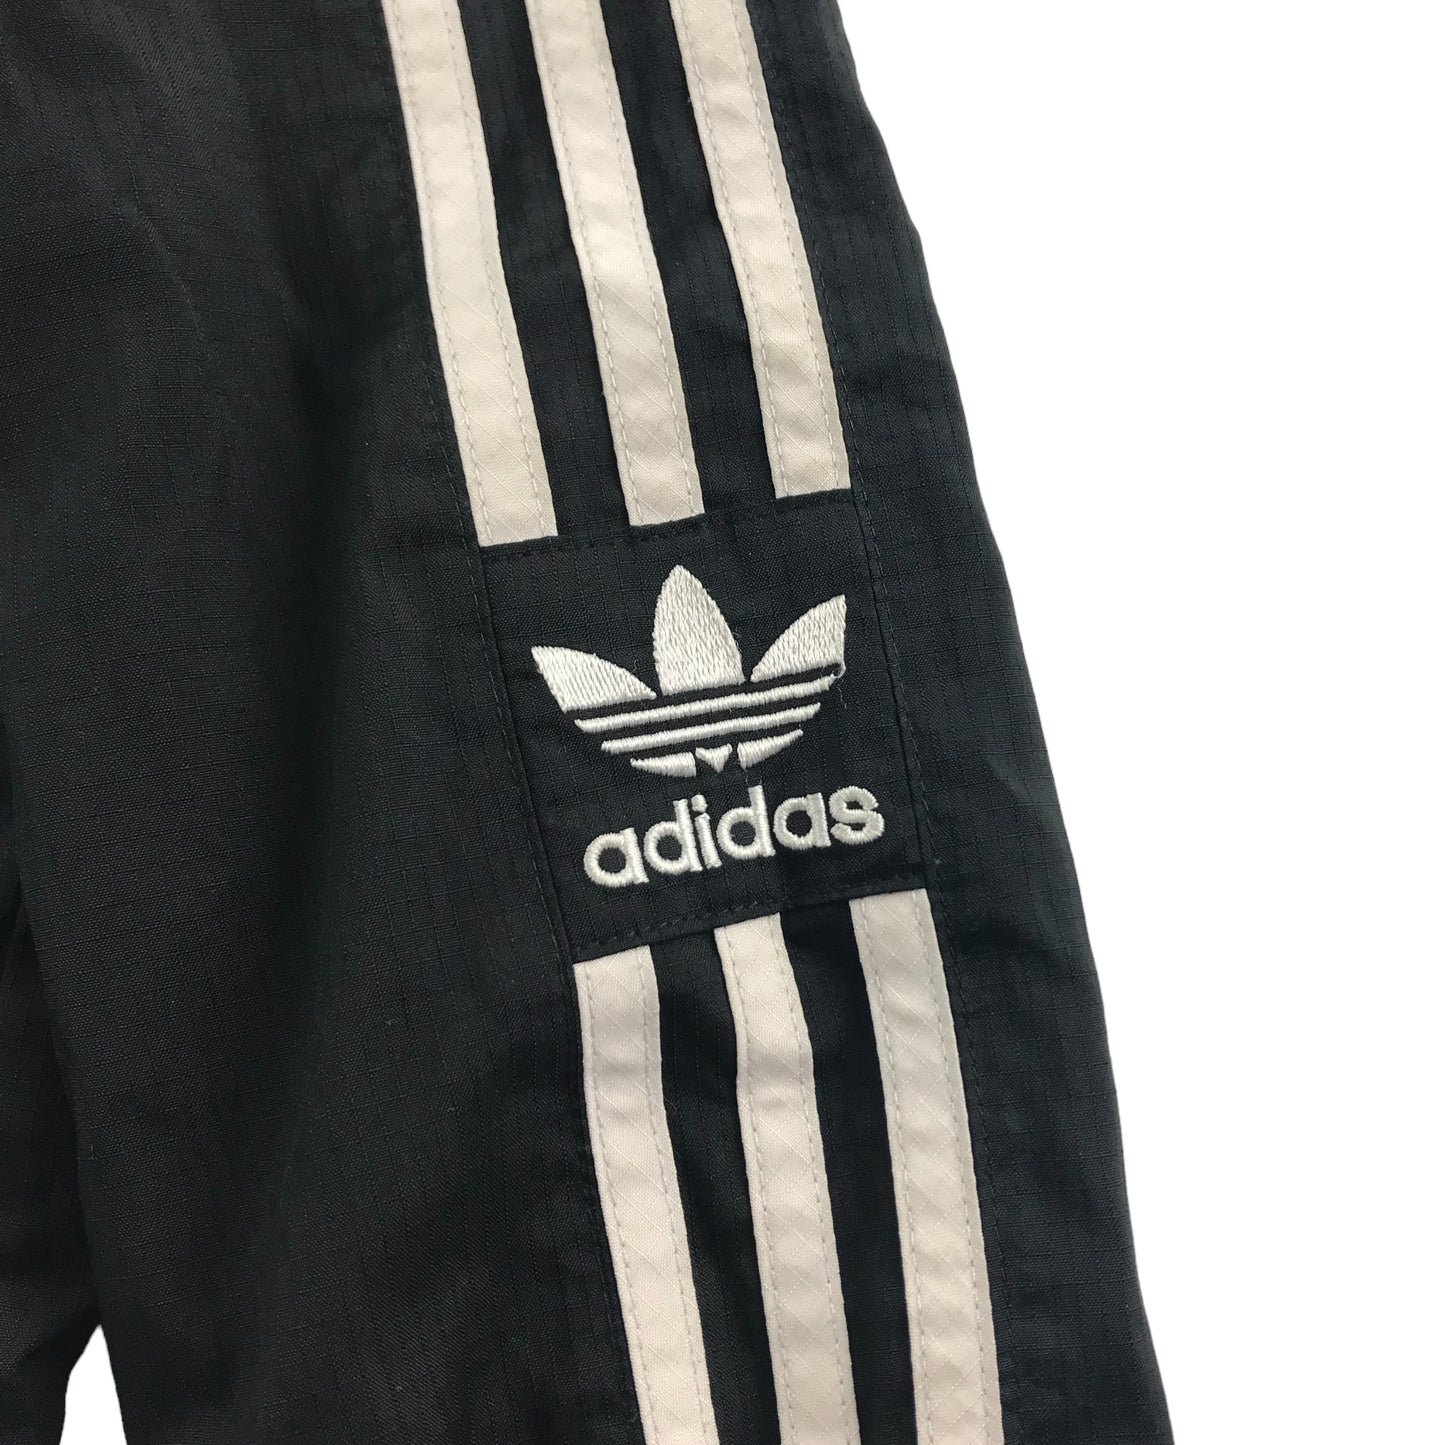 Adidas Sport Jacket Age 9 Black Full Zipper Hooded